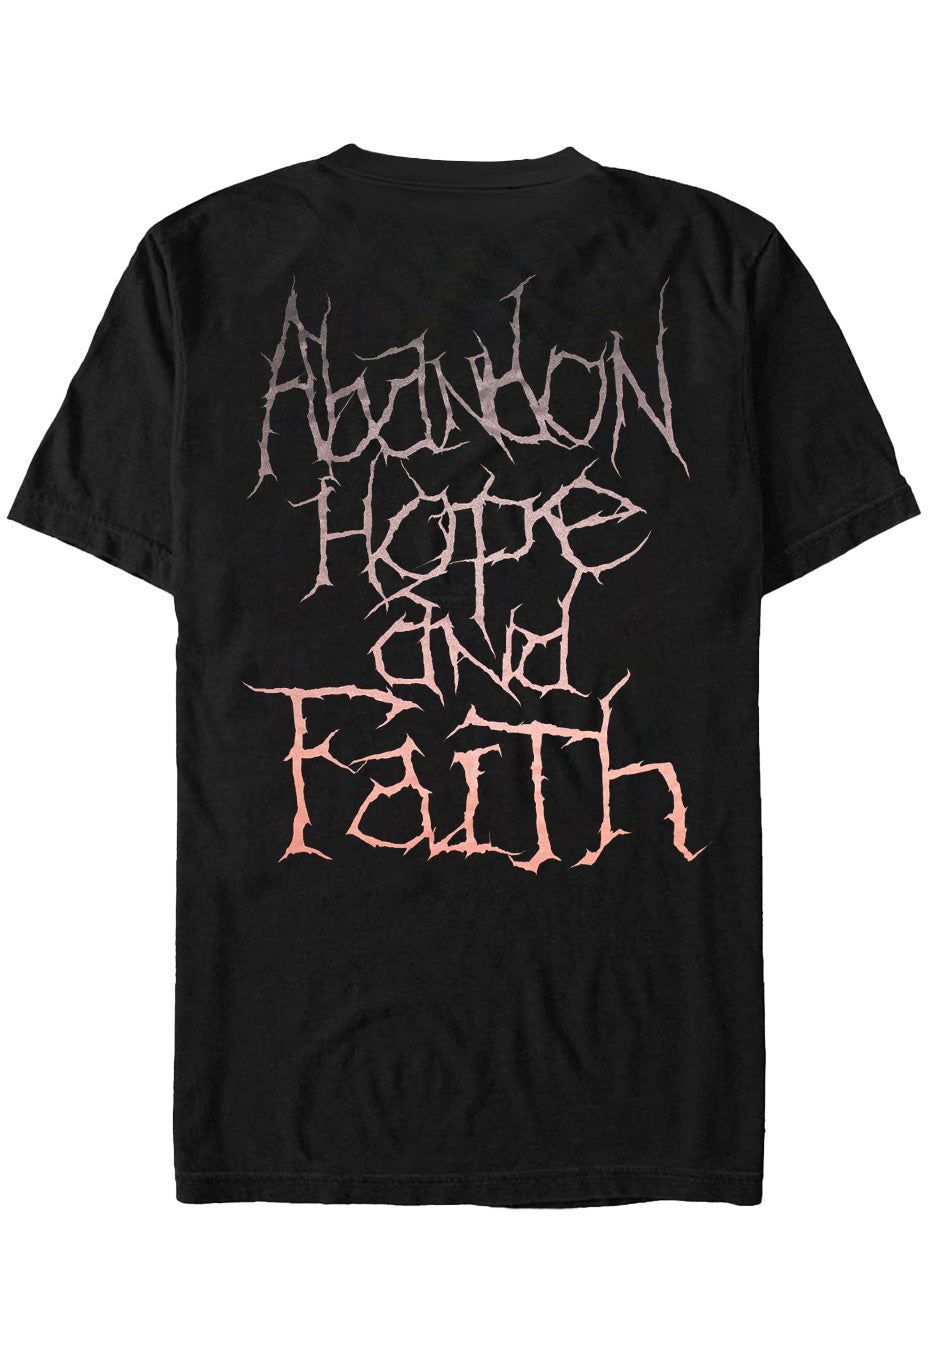 Suffocation - Abandon Hope - T-Shirt